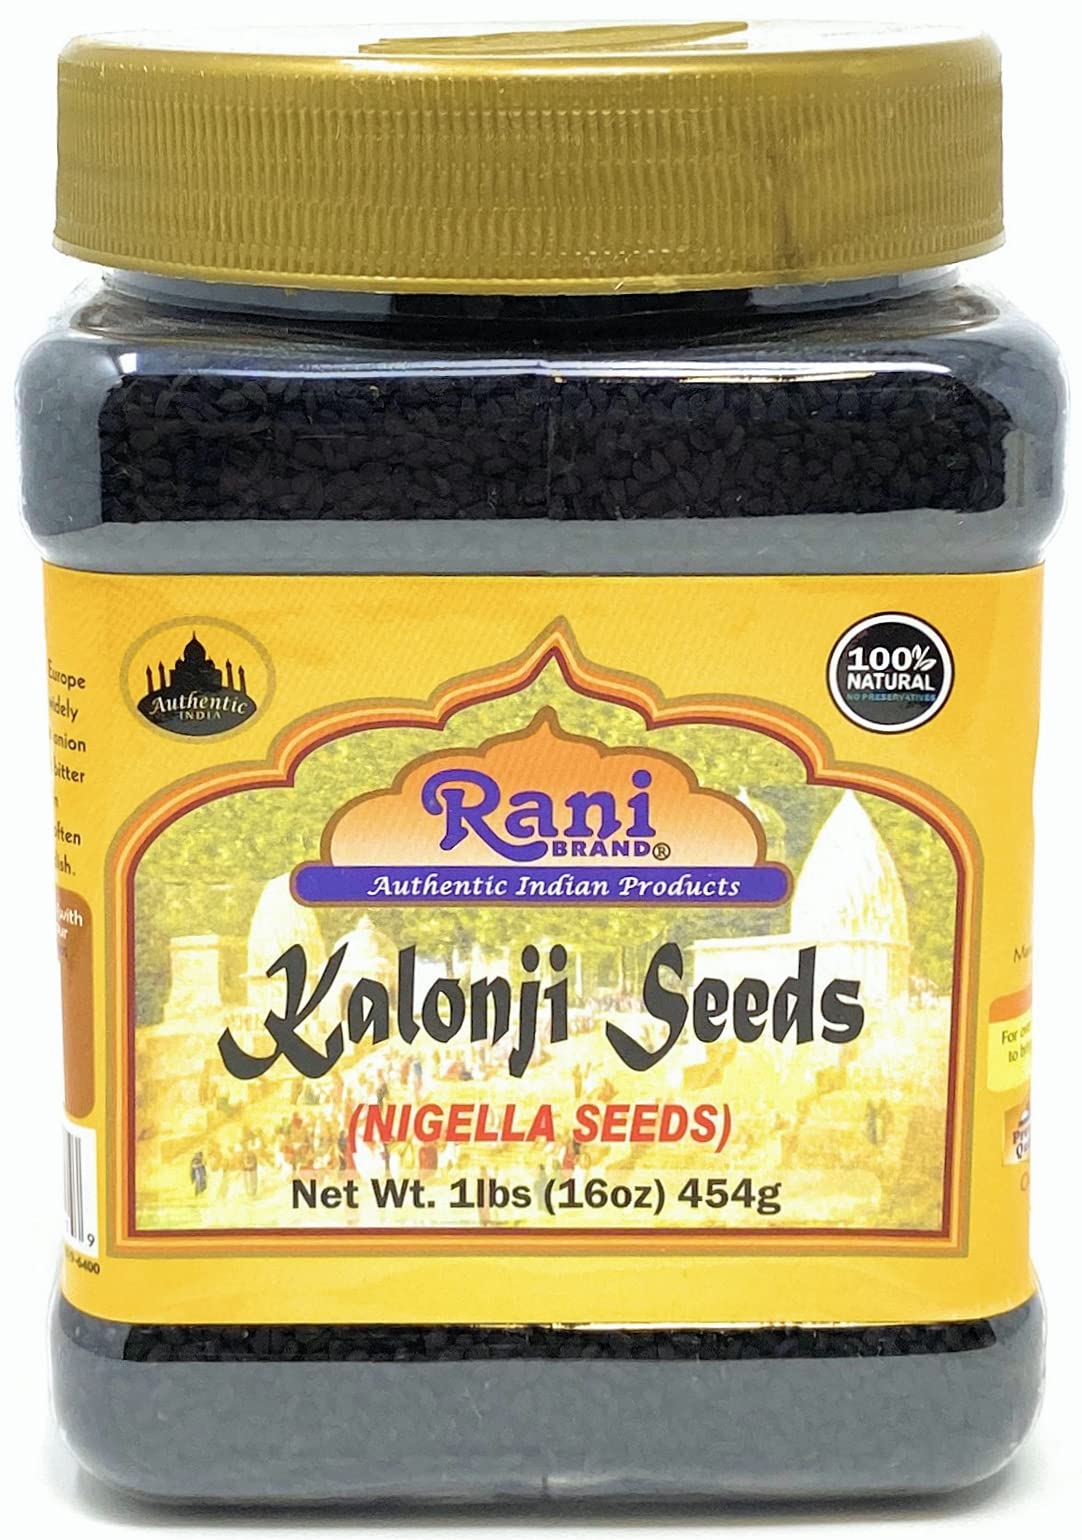 Rani Kalonji Seeds Whole (Black Seed, Nigella Sativa, Black Cumin) Spice 16oz (454g) PET Jar, All Natural ~ Gluten Friendly | NON-GMO | Vegan | Indian Origin - image 1 of 4